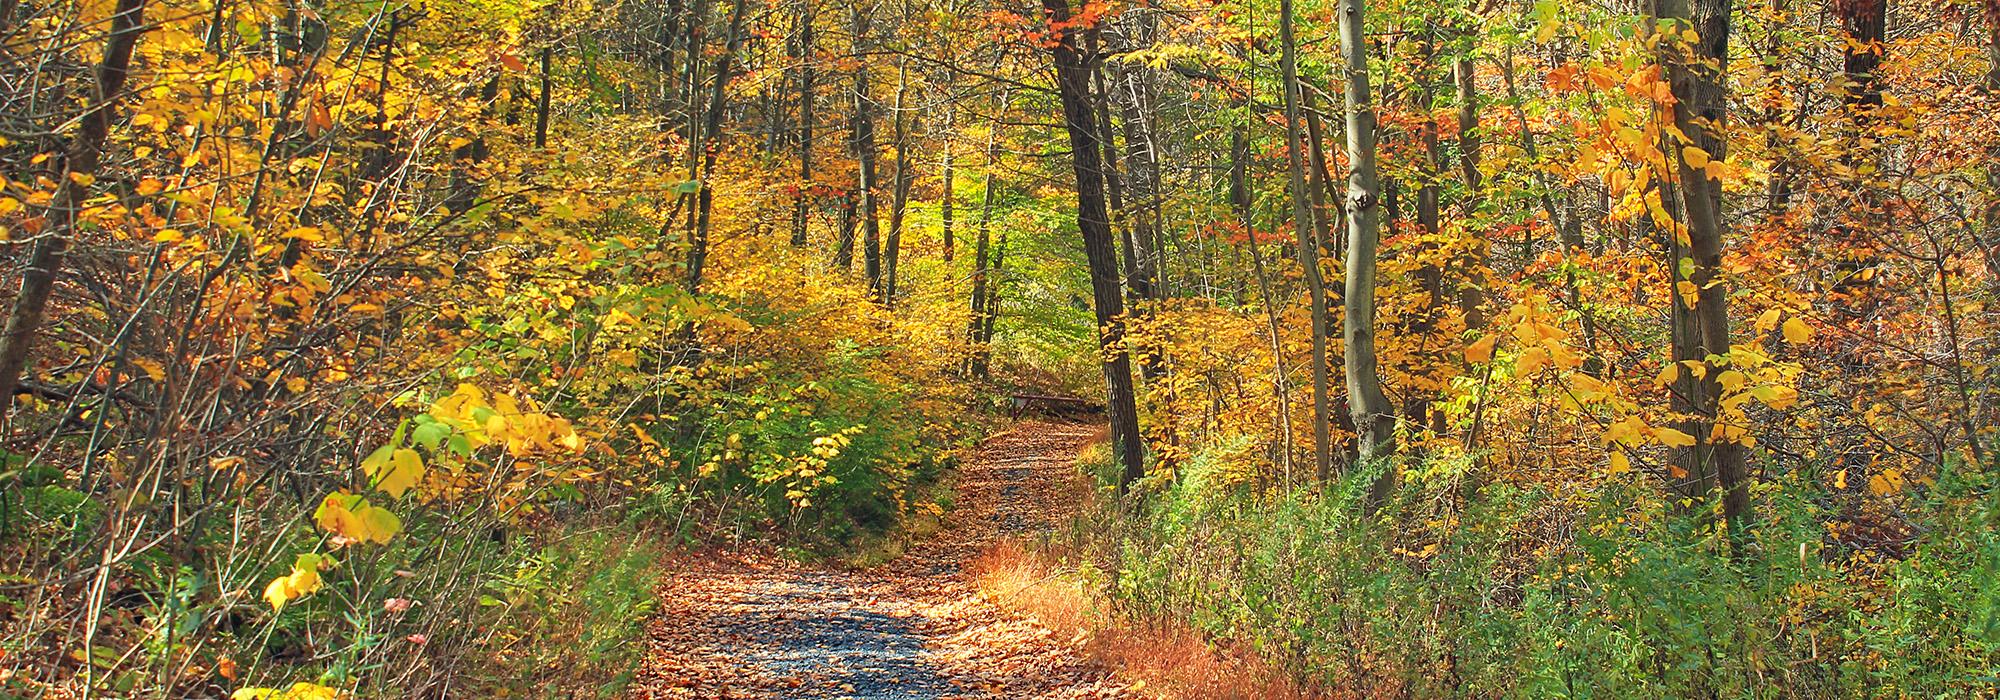 Totts Gap Road, Monroe County, near the Appalachian Trail at Totts Gap, Appalachian Trail, PA